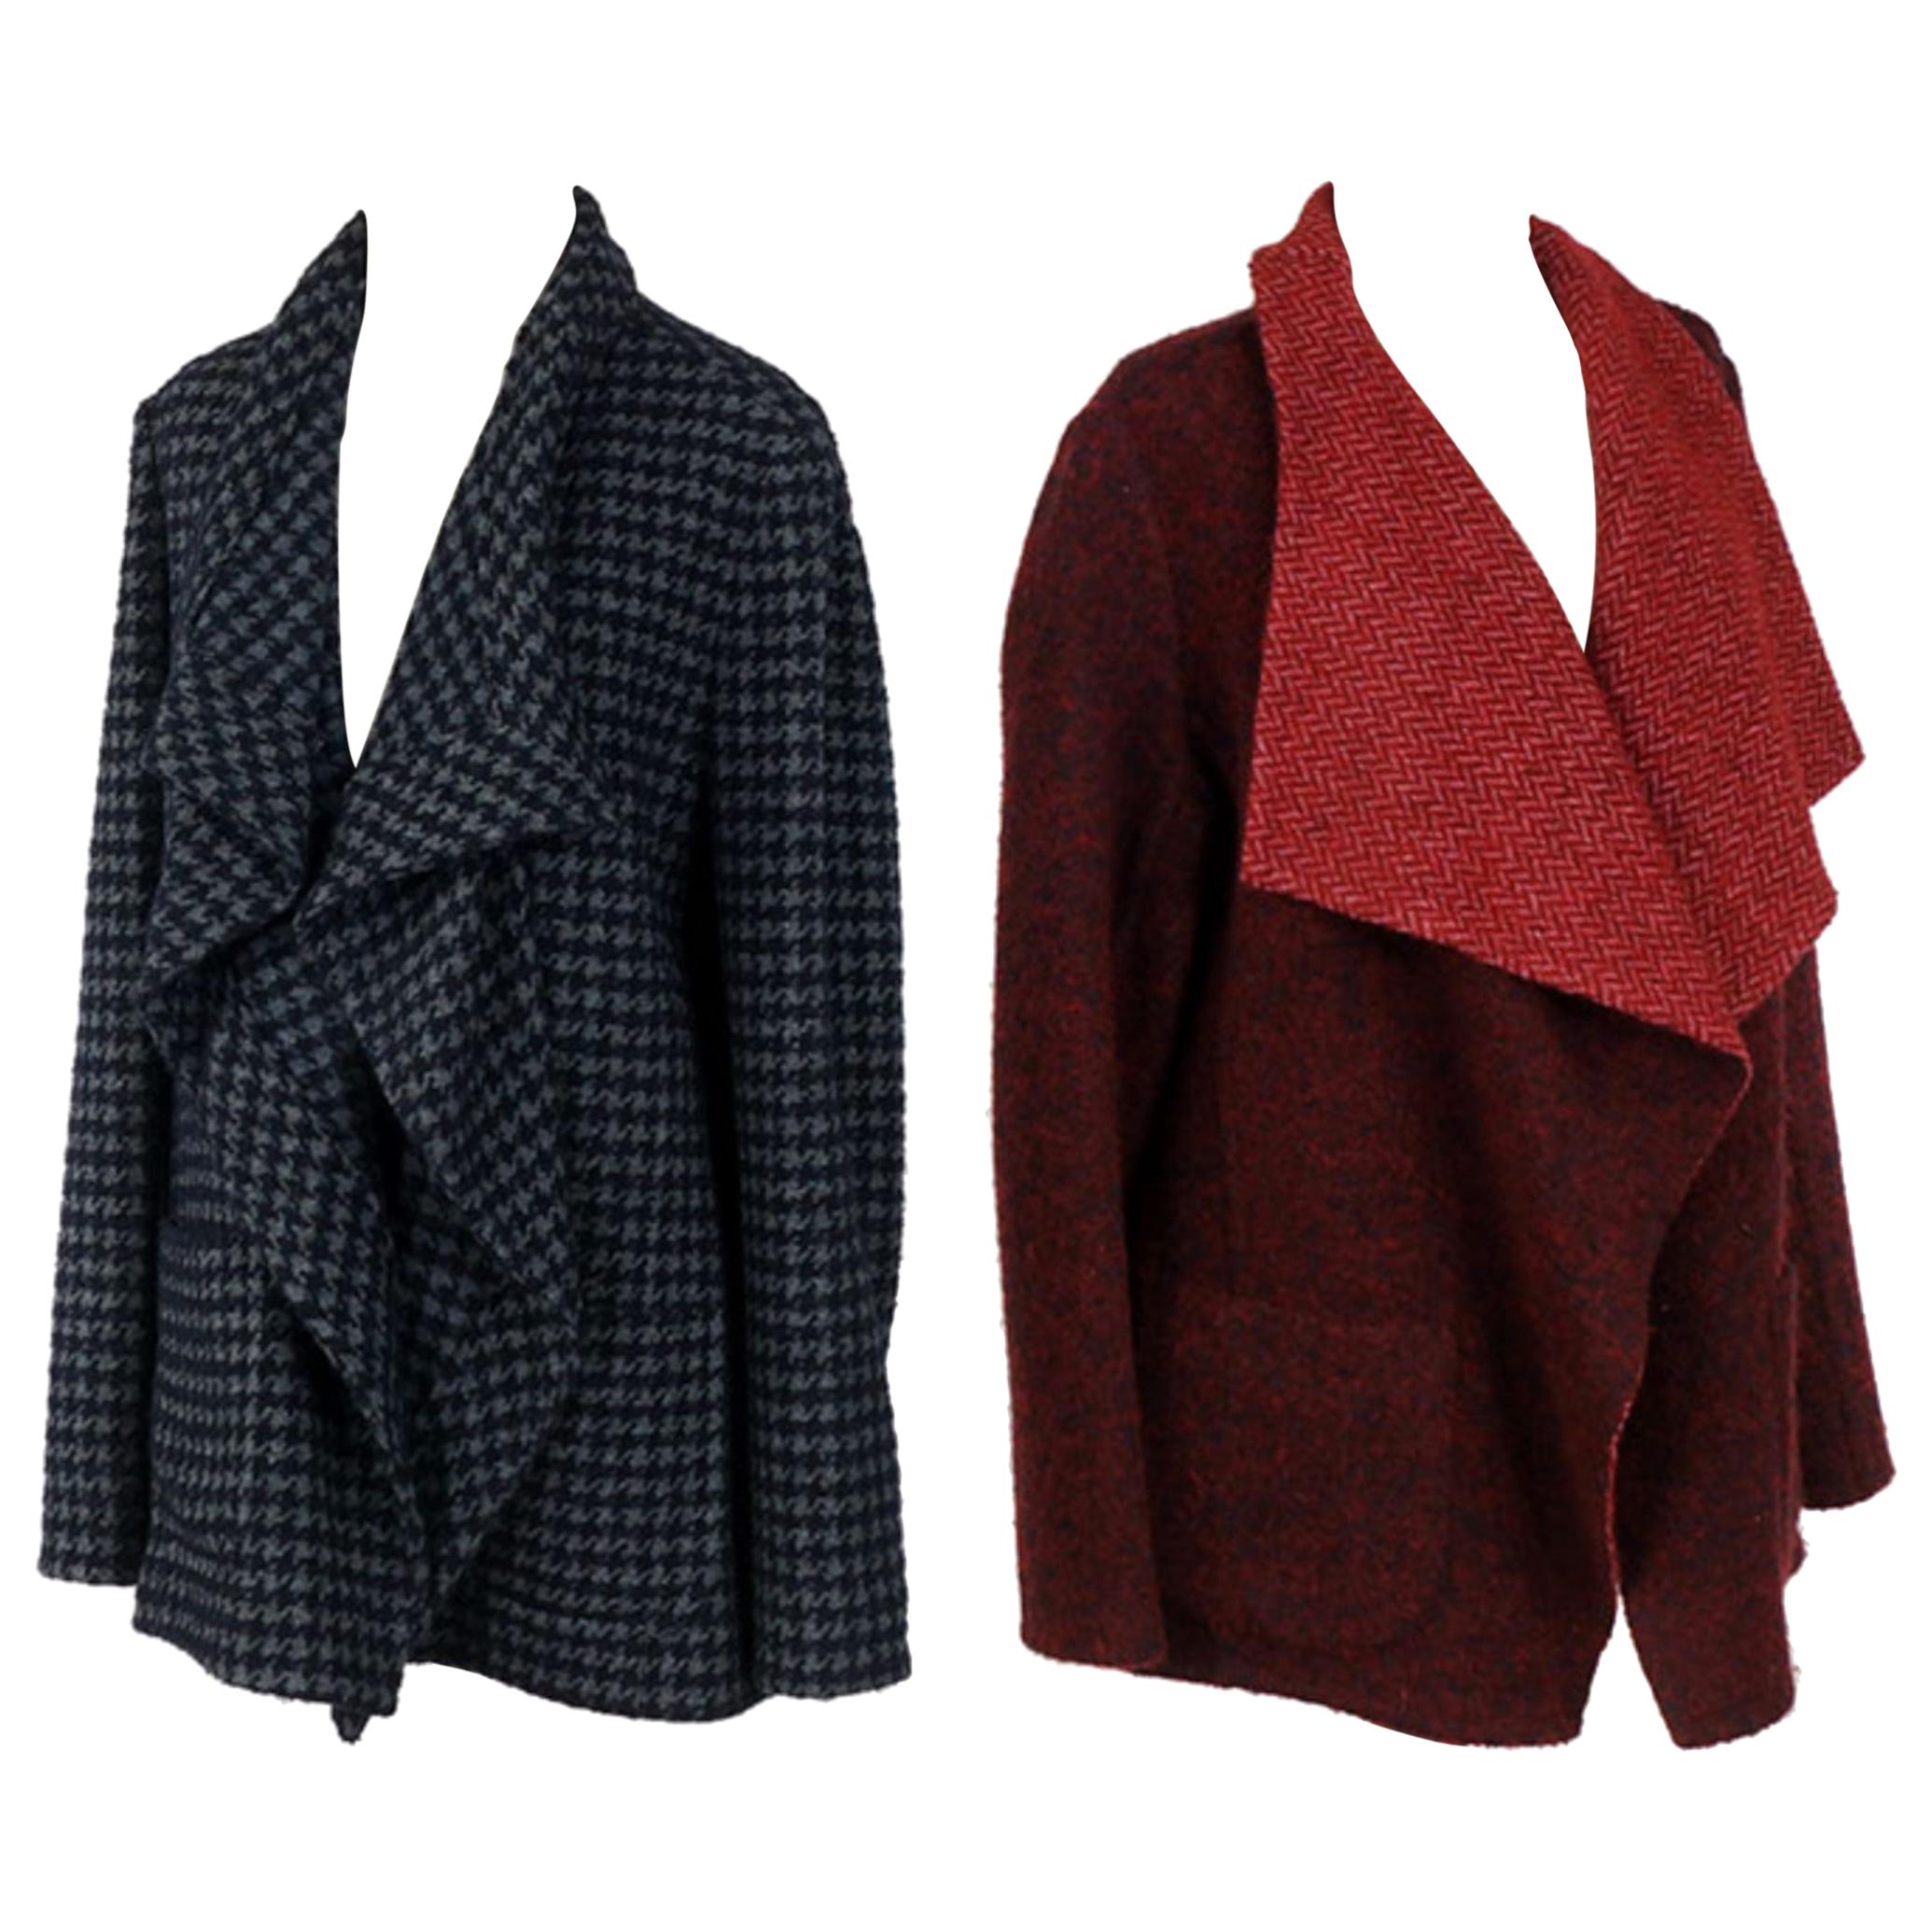 Two Wool/Cashmer Designer Jacketse Blue Houndstooth, Deep Red Reversible Jacket.